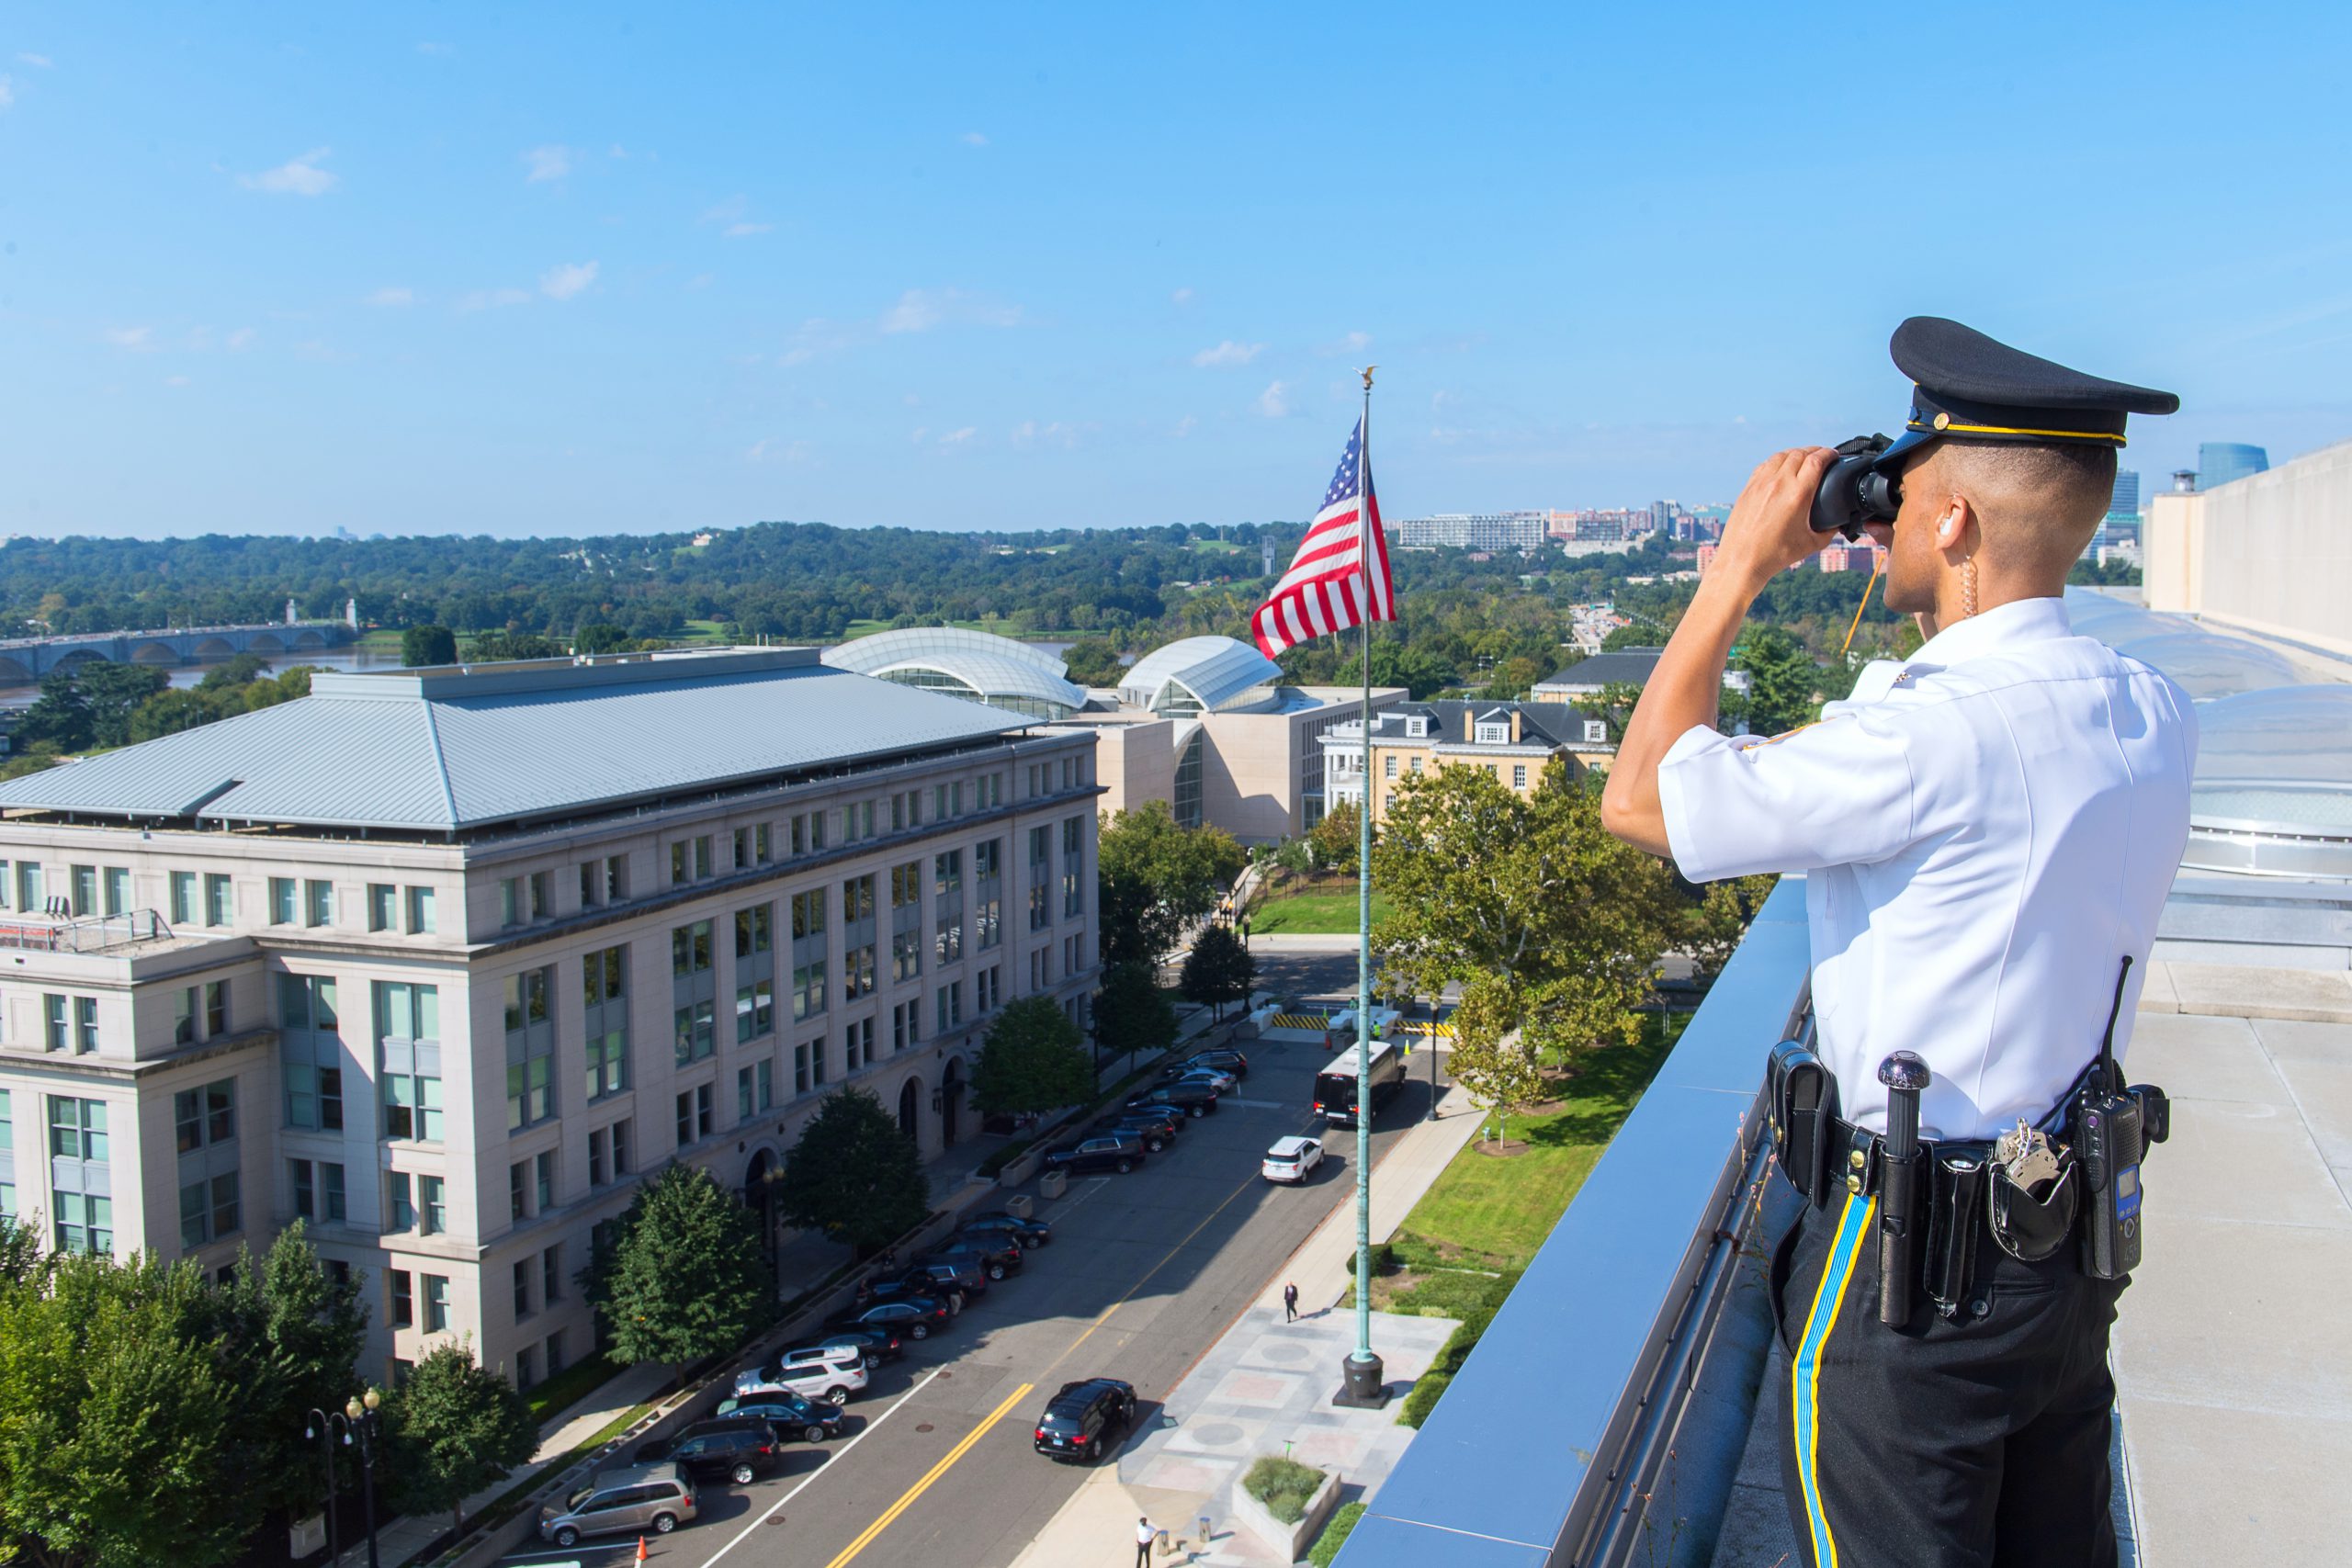 Security Officer looking through binoculars on top of building